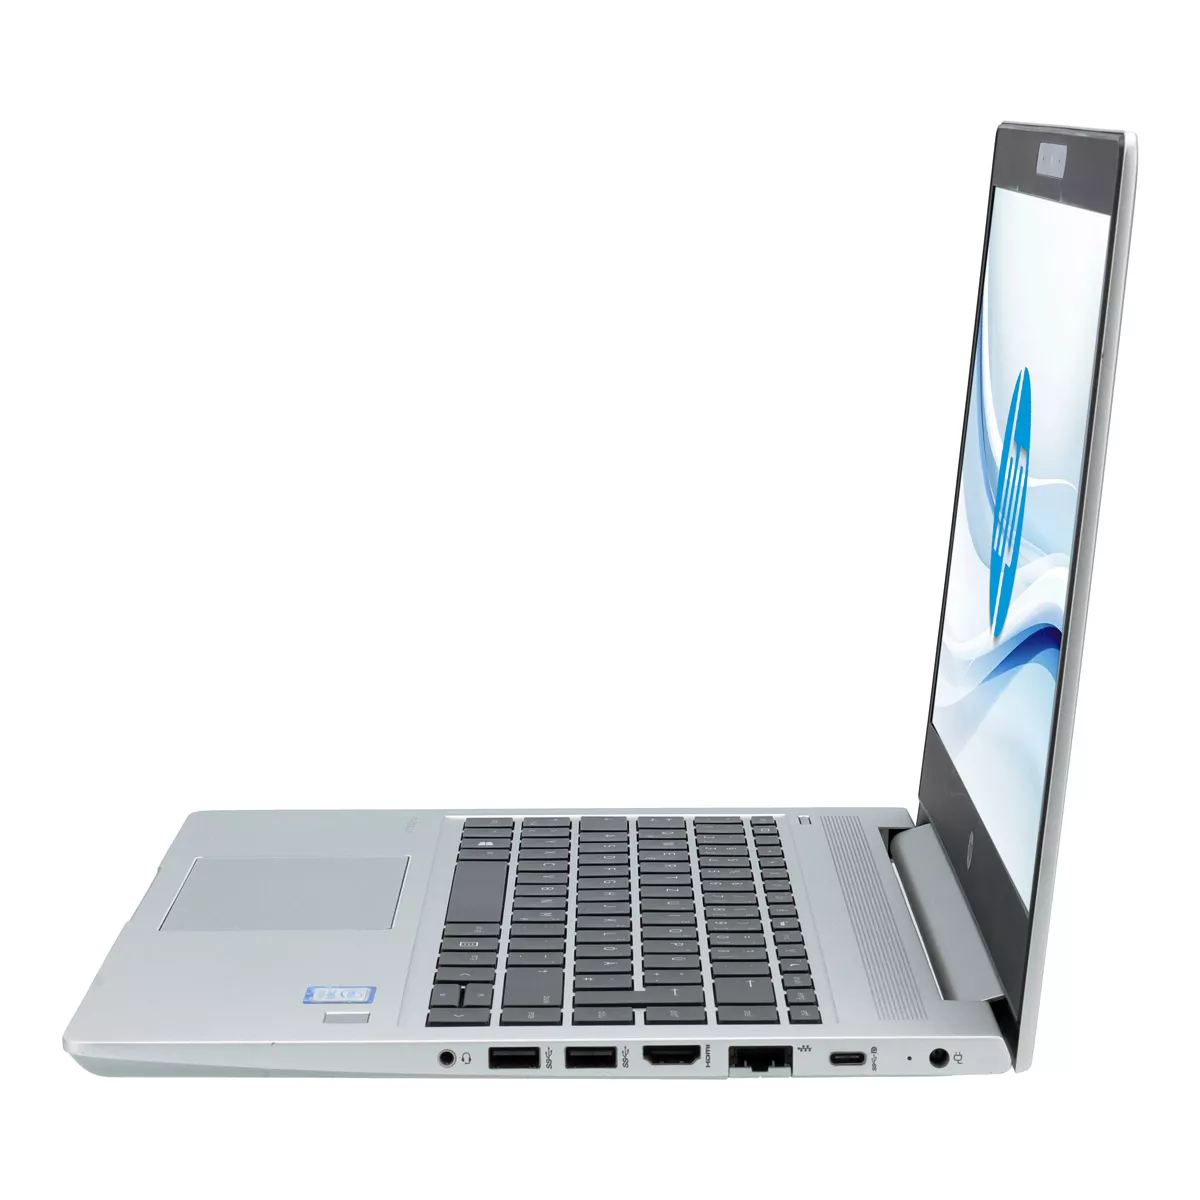 HP ProBook 445R G6 AMD Ryzen 5 3500U 8 GB 240 GB M.2 nVME SSD Webcam A